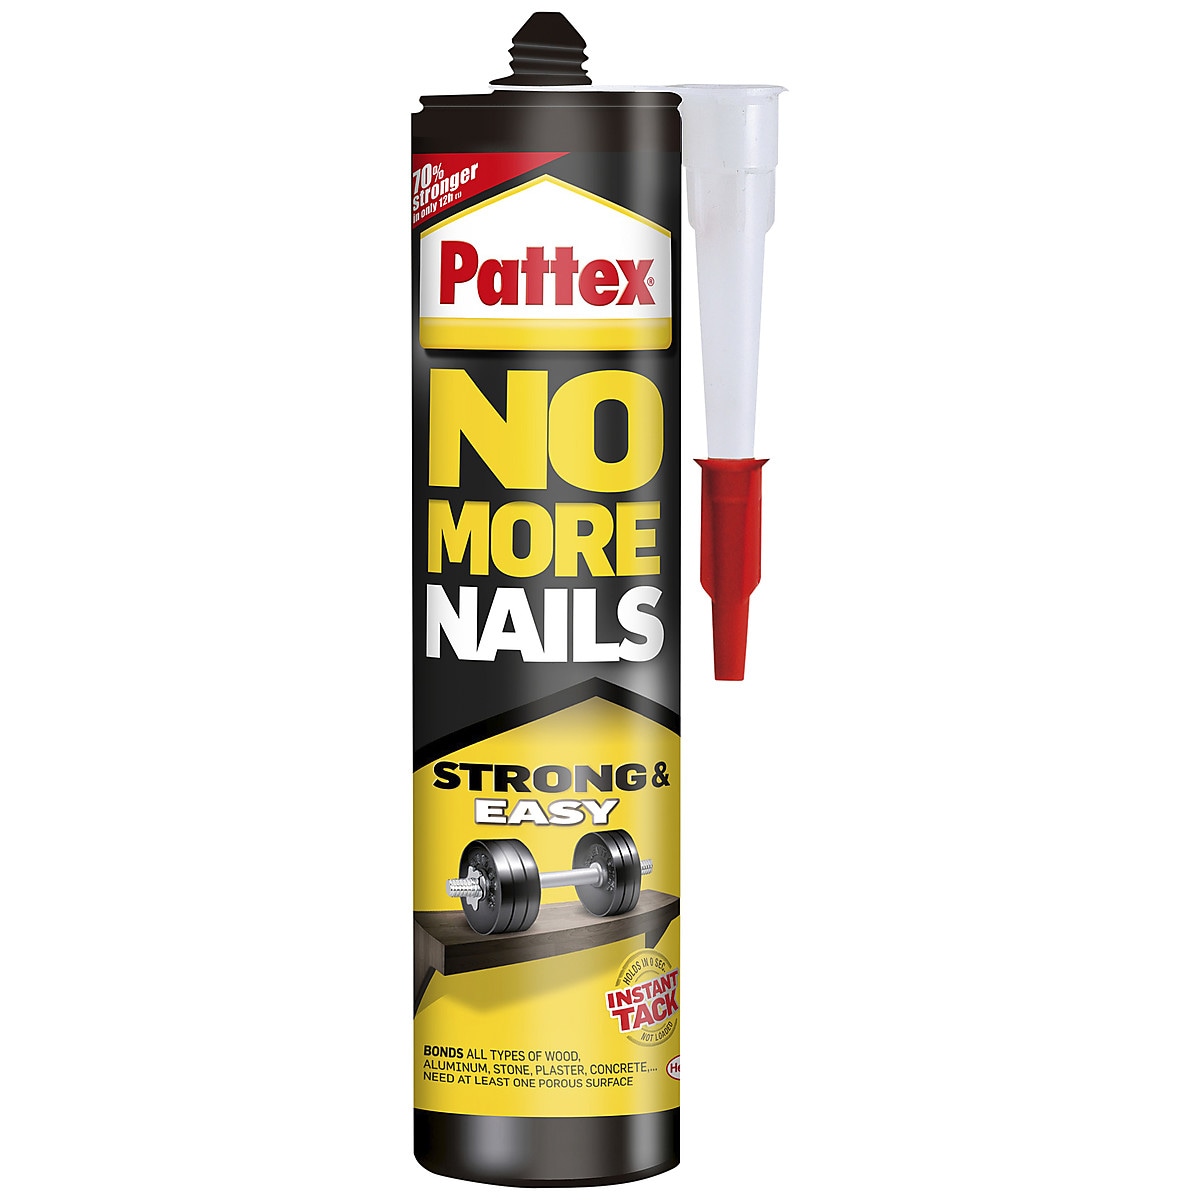 Asennusliima Pattex No More Nails, patruuna 300 ml

